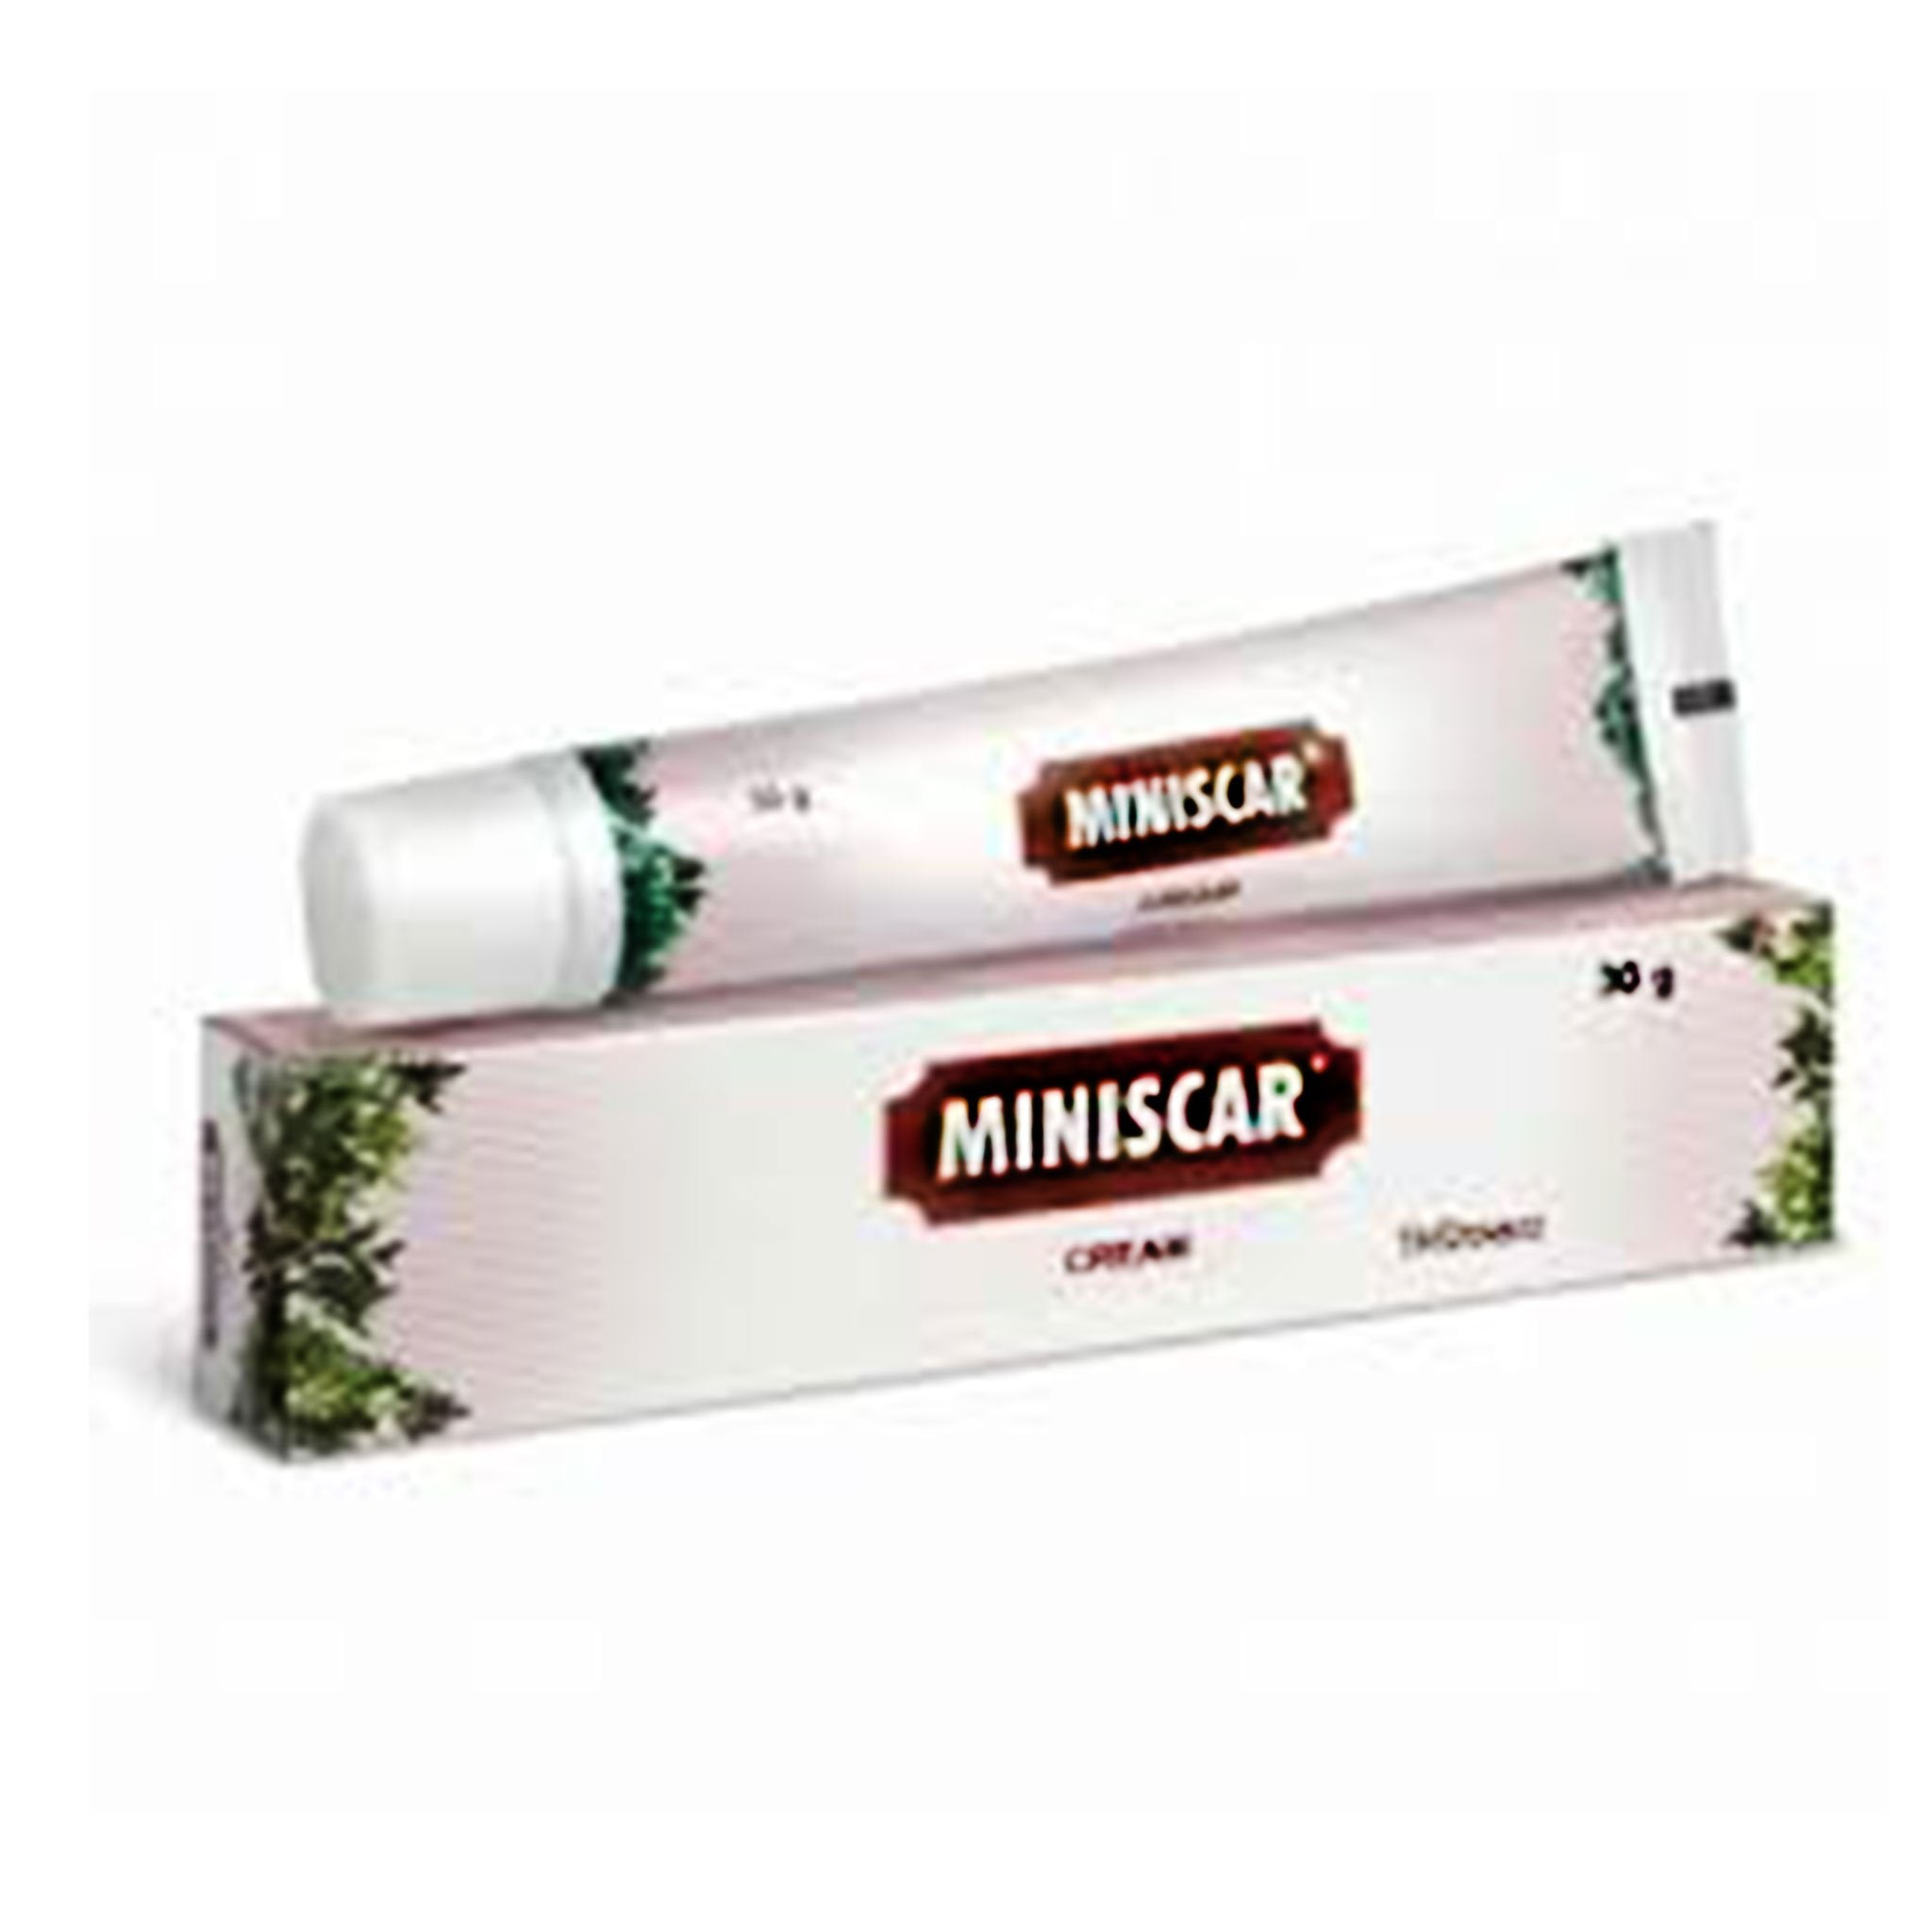 Charak Miniscar Cream 30 grams - Prevents Stretch marks/ Removes Scars - Simpal Boutique